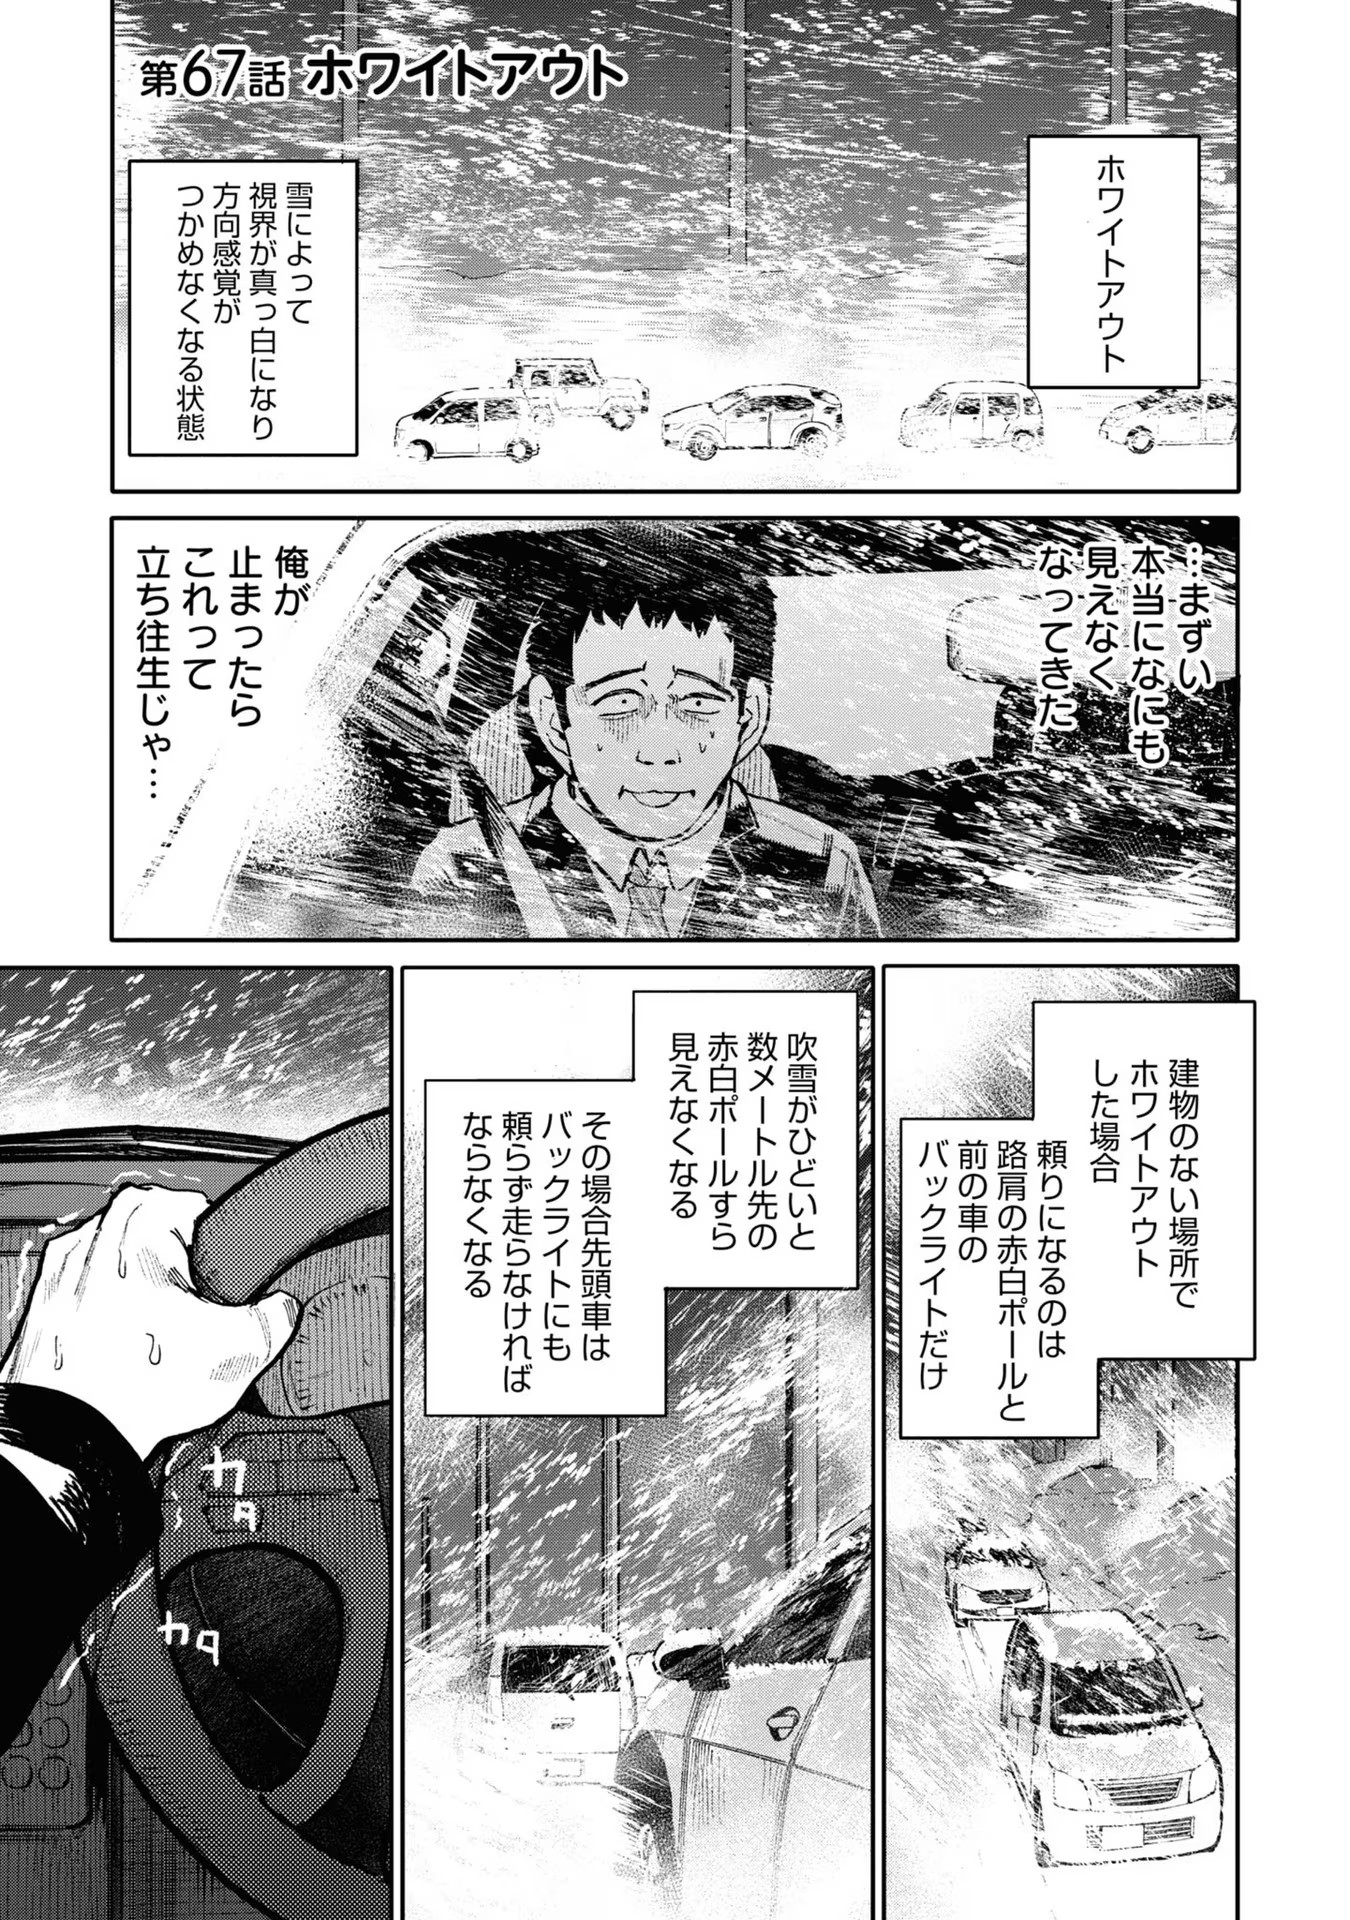 Ojii-san to Obaa-san ga Wakigaetta Hanashi - Chapter 67 - Page 1